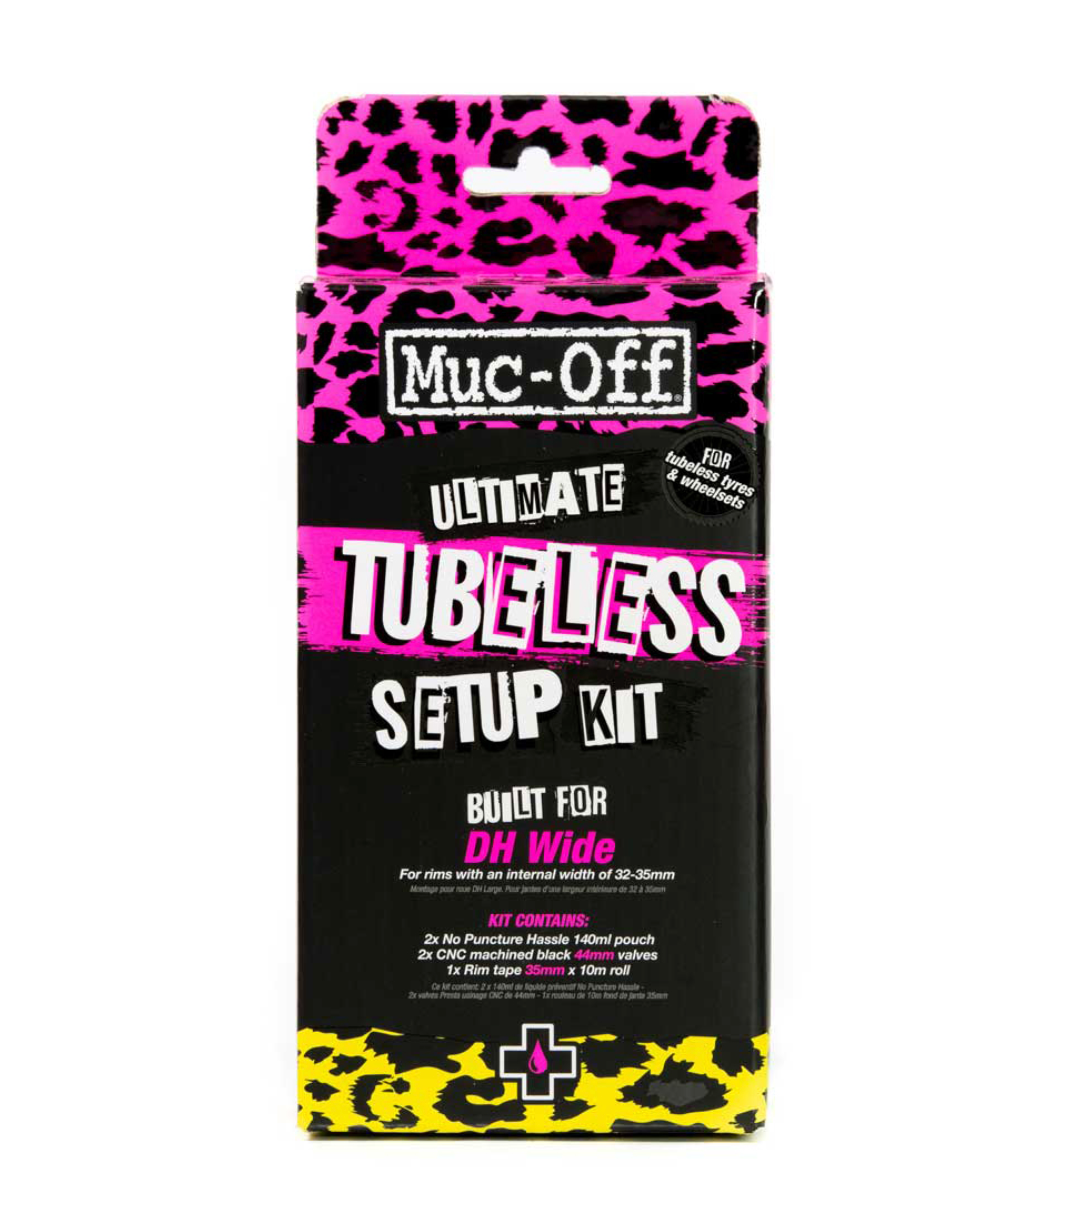 Muc-off Ultimate Tubeless Set-Up Kits